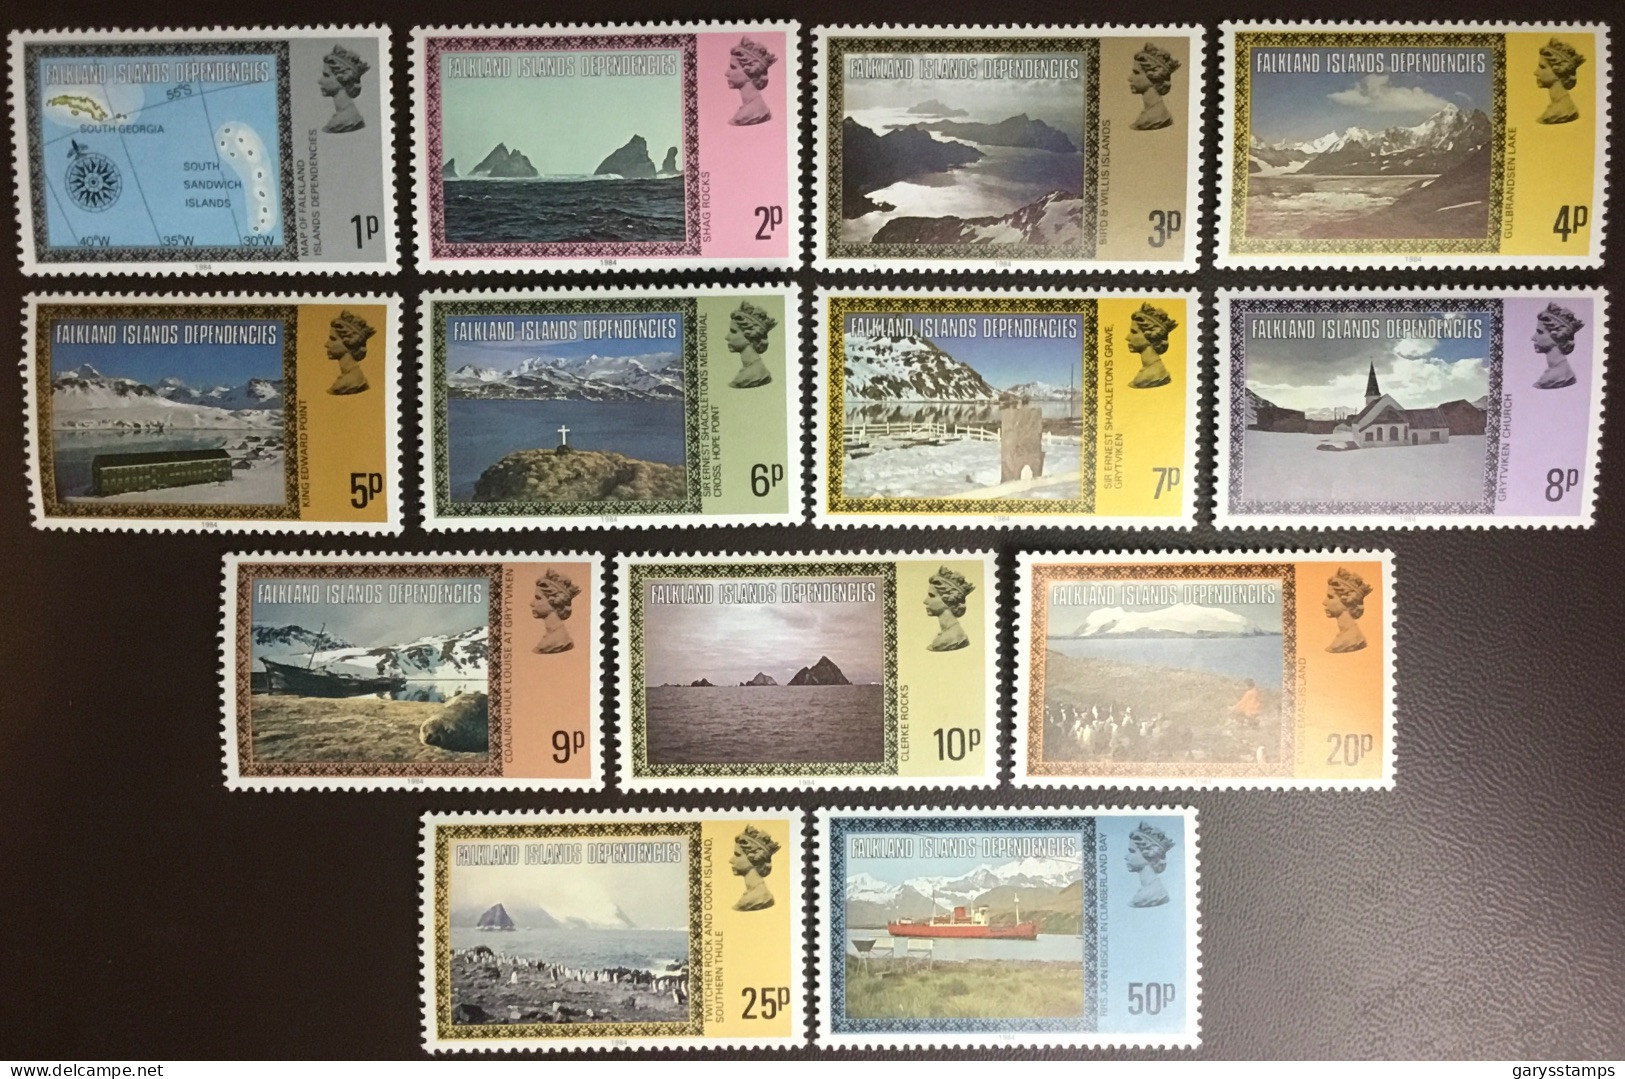 Falkland Islands Dependencies 1984 Definitives Set With Imprint Date MNH - Südgeorgien